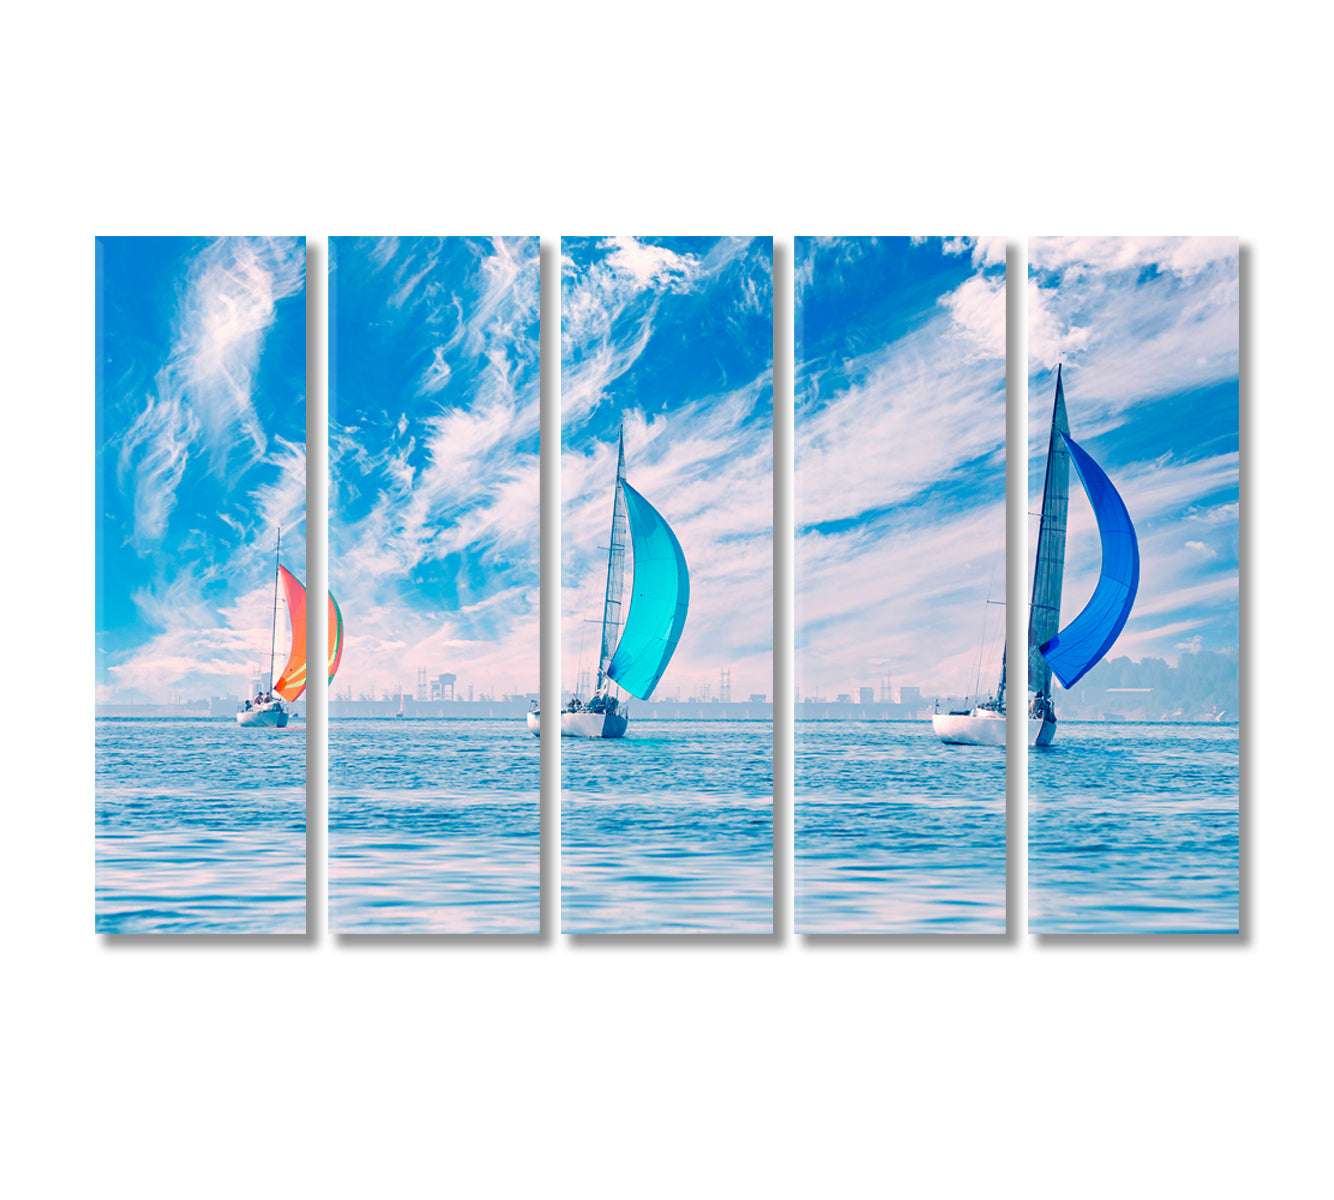 Sailing Yachts Sail under Beautiful Sky Canvas Print-Canvas Print-CetArt-5 Panels-36x24 inches-CetArt